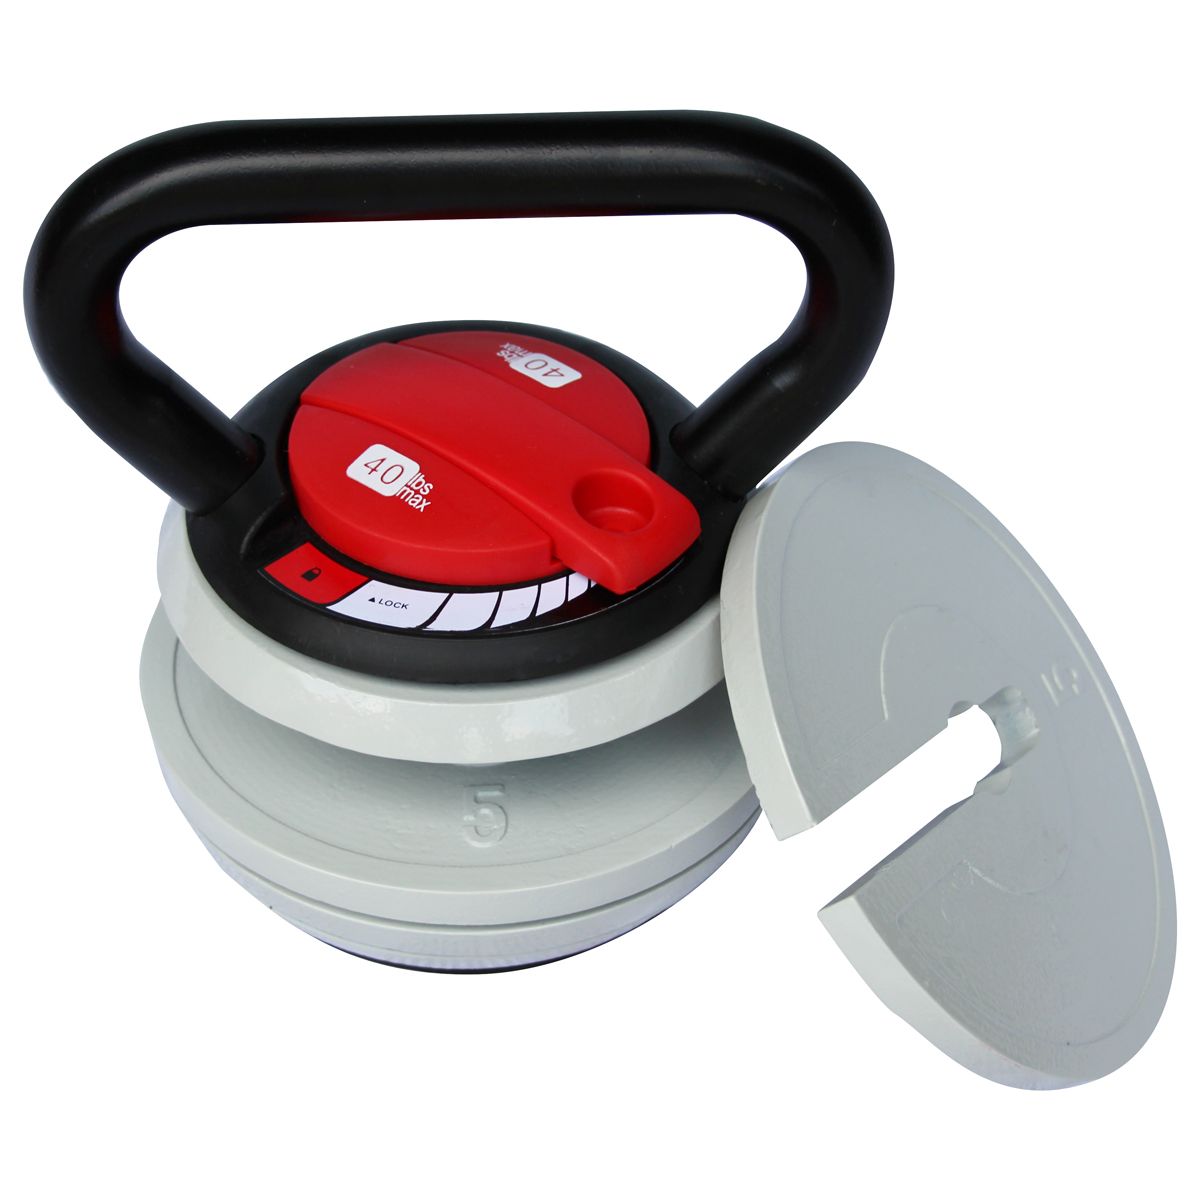 GladiatorFit Verstellbare Kettlebell mit variabler Last aus Stahl | 18 KG